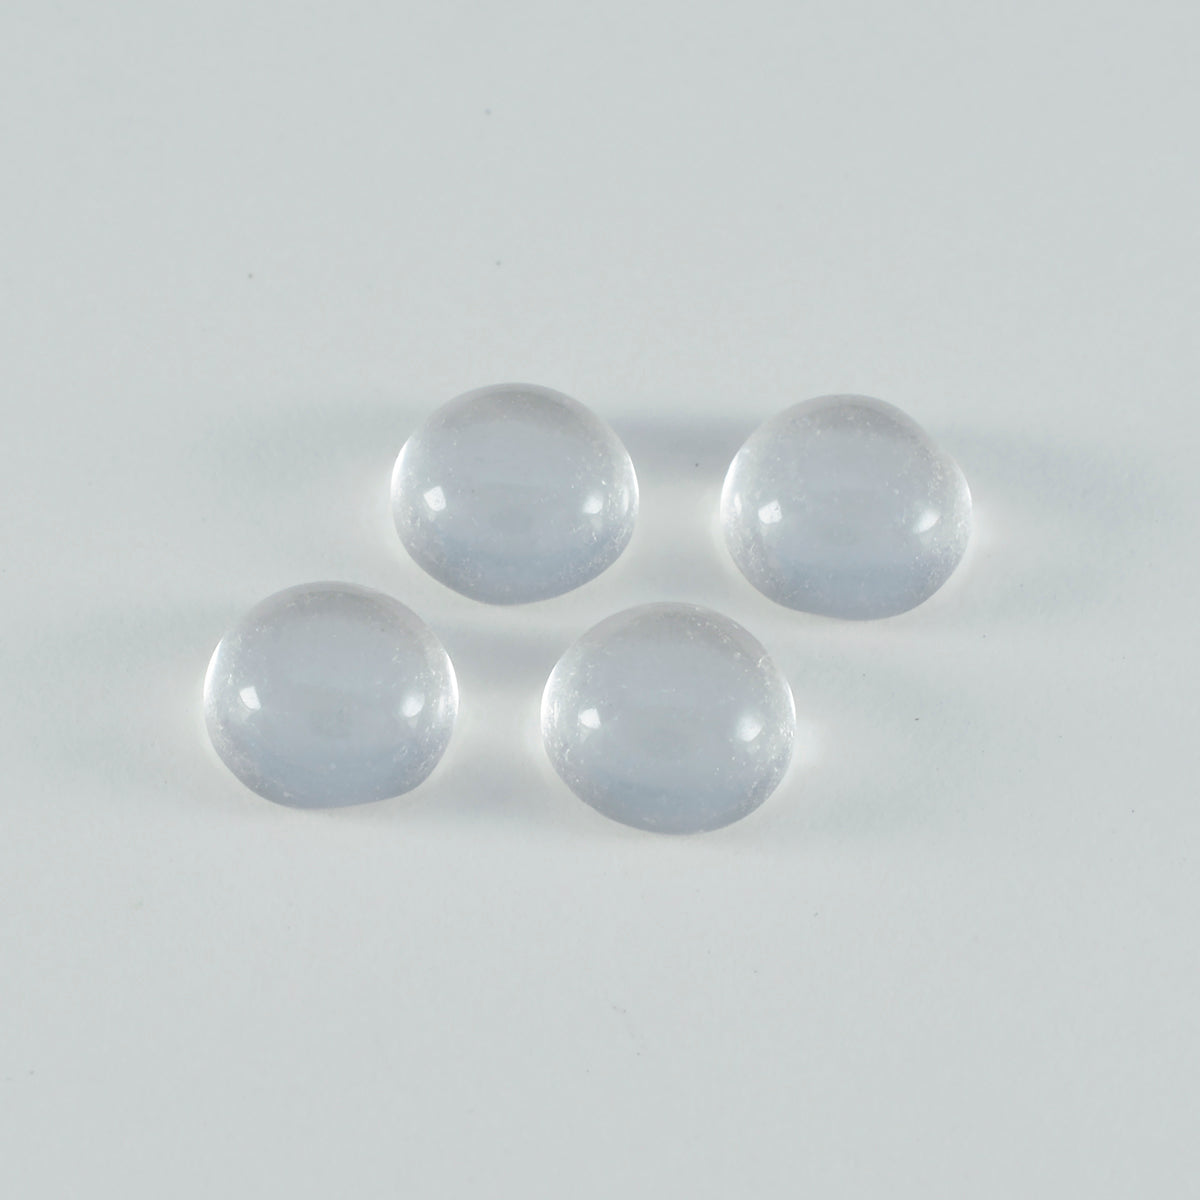 Riyogems 1PC White Crystal Quartz Cabochon 6x6 mm Round Shape A+ Quality Loose Gemstone